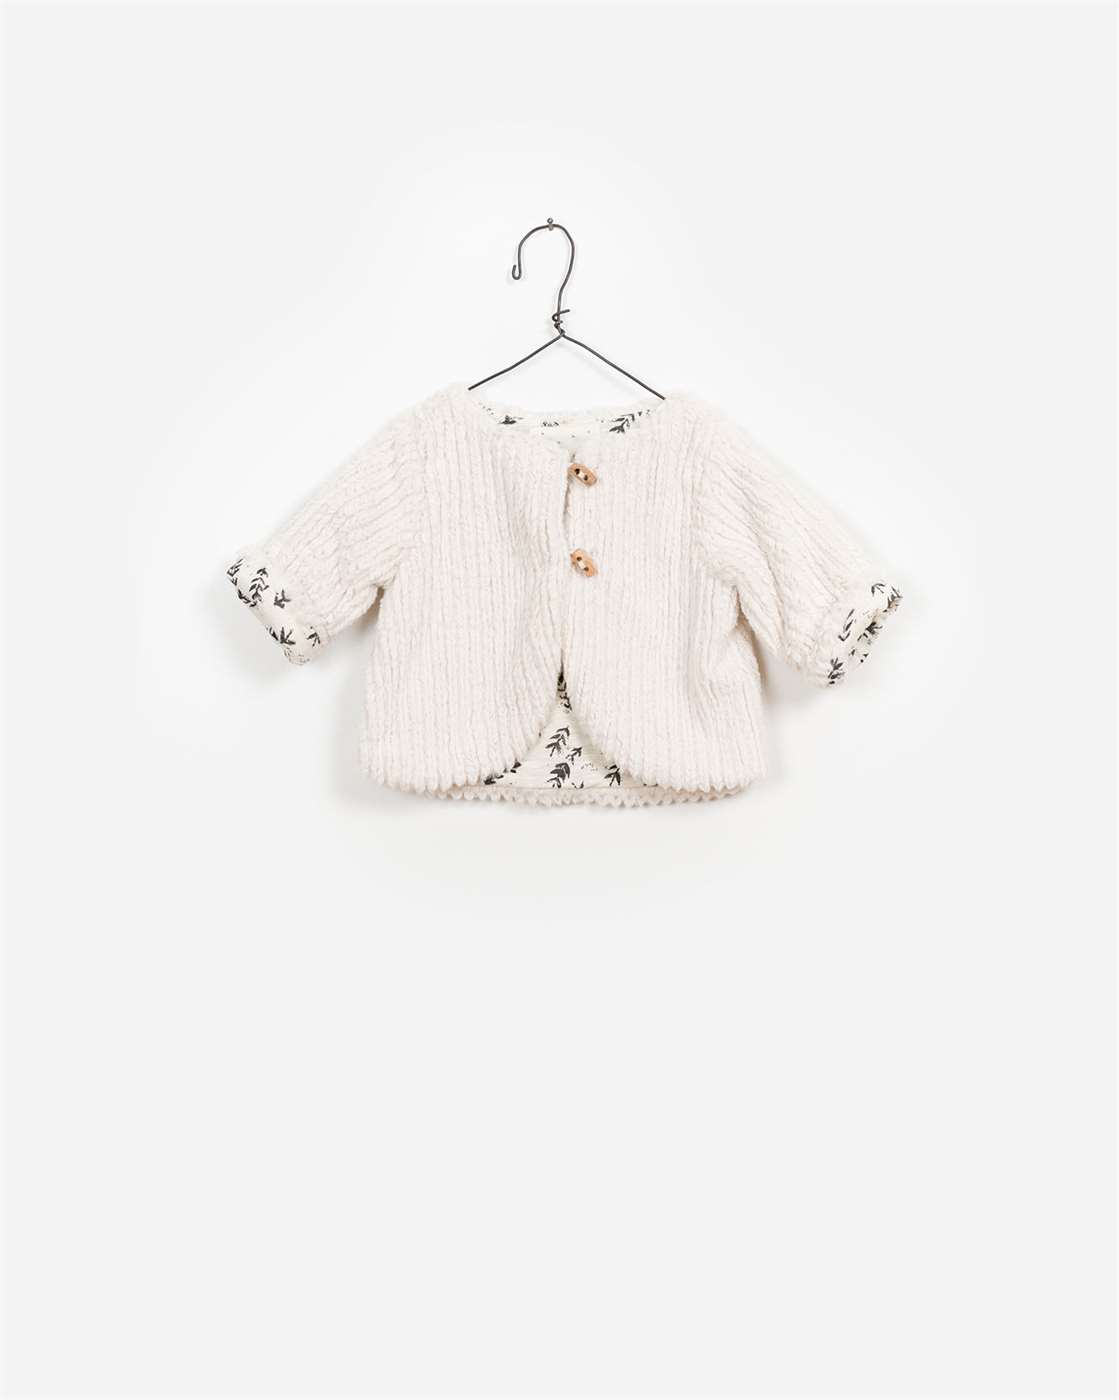 BeeBoo|BeeBoo PlayUp vêtement bébé baby cloth manteau coat fur blanc white